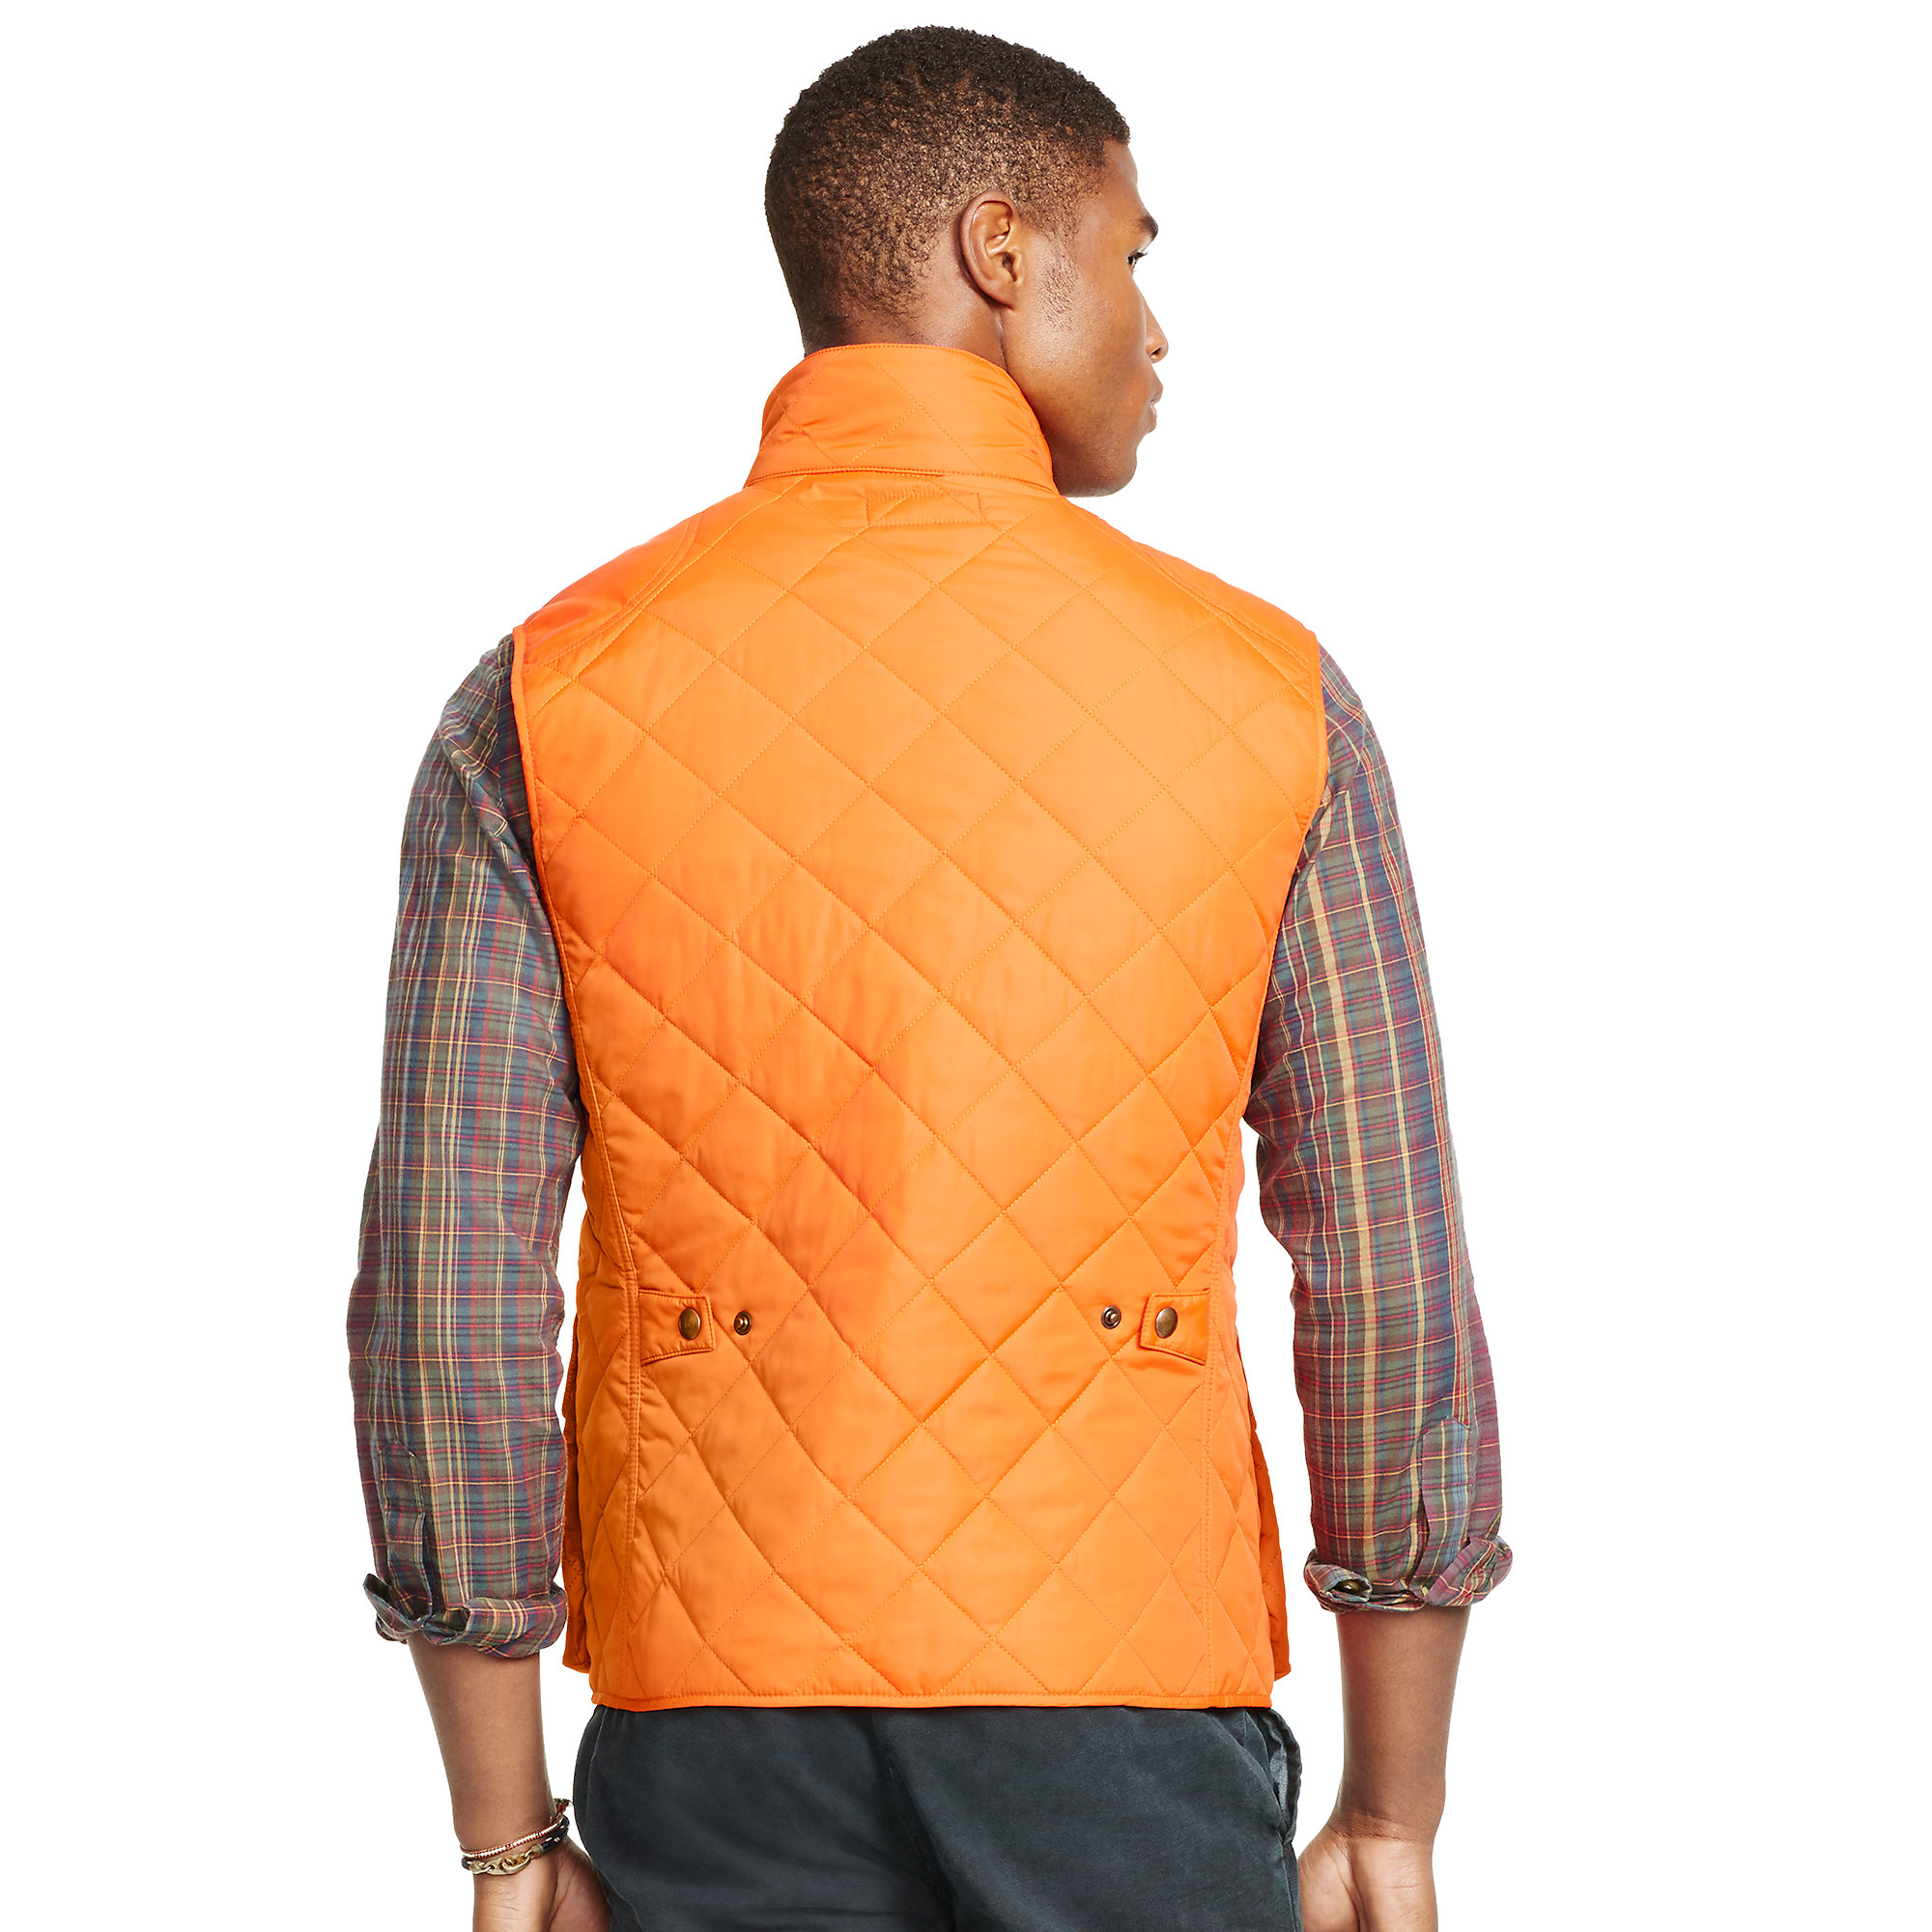 Polo Ralph Lauren Cotton Diamond-quilted Vest in Orange for Men - Lyst